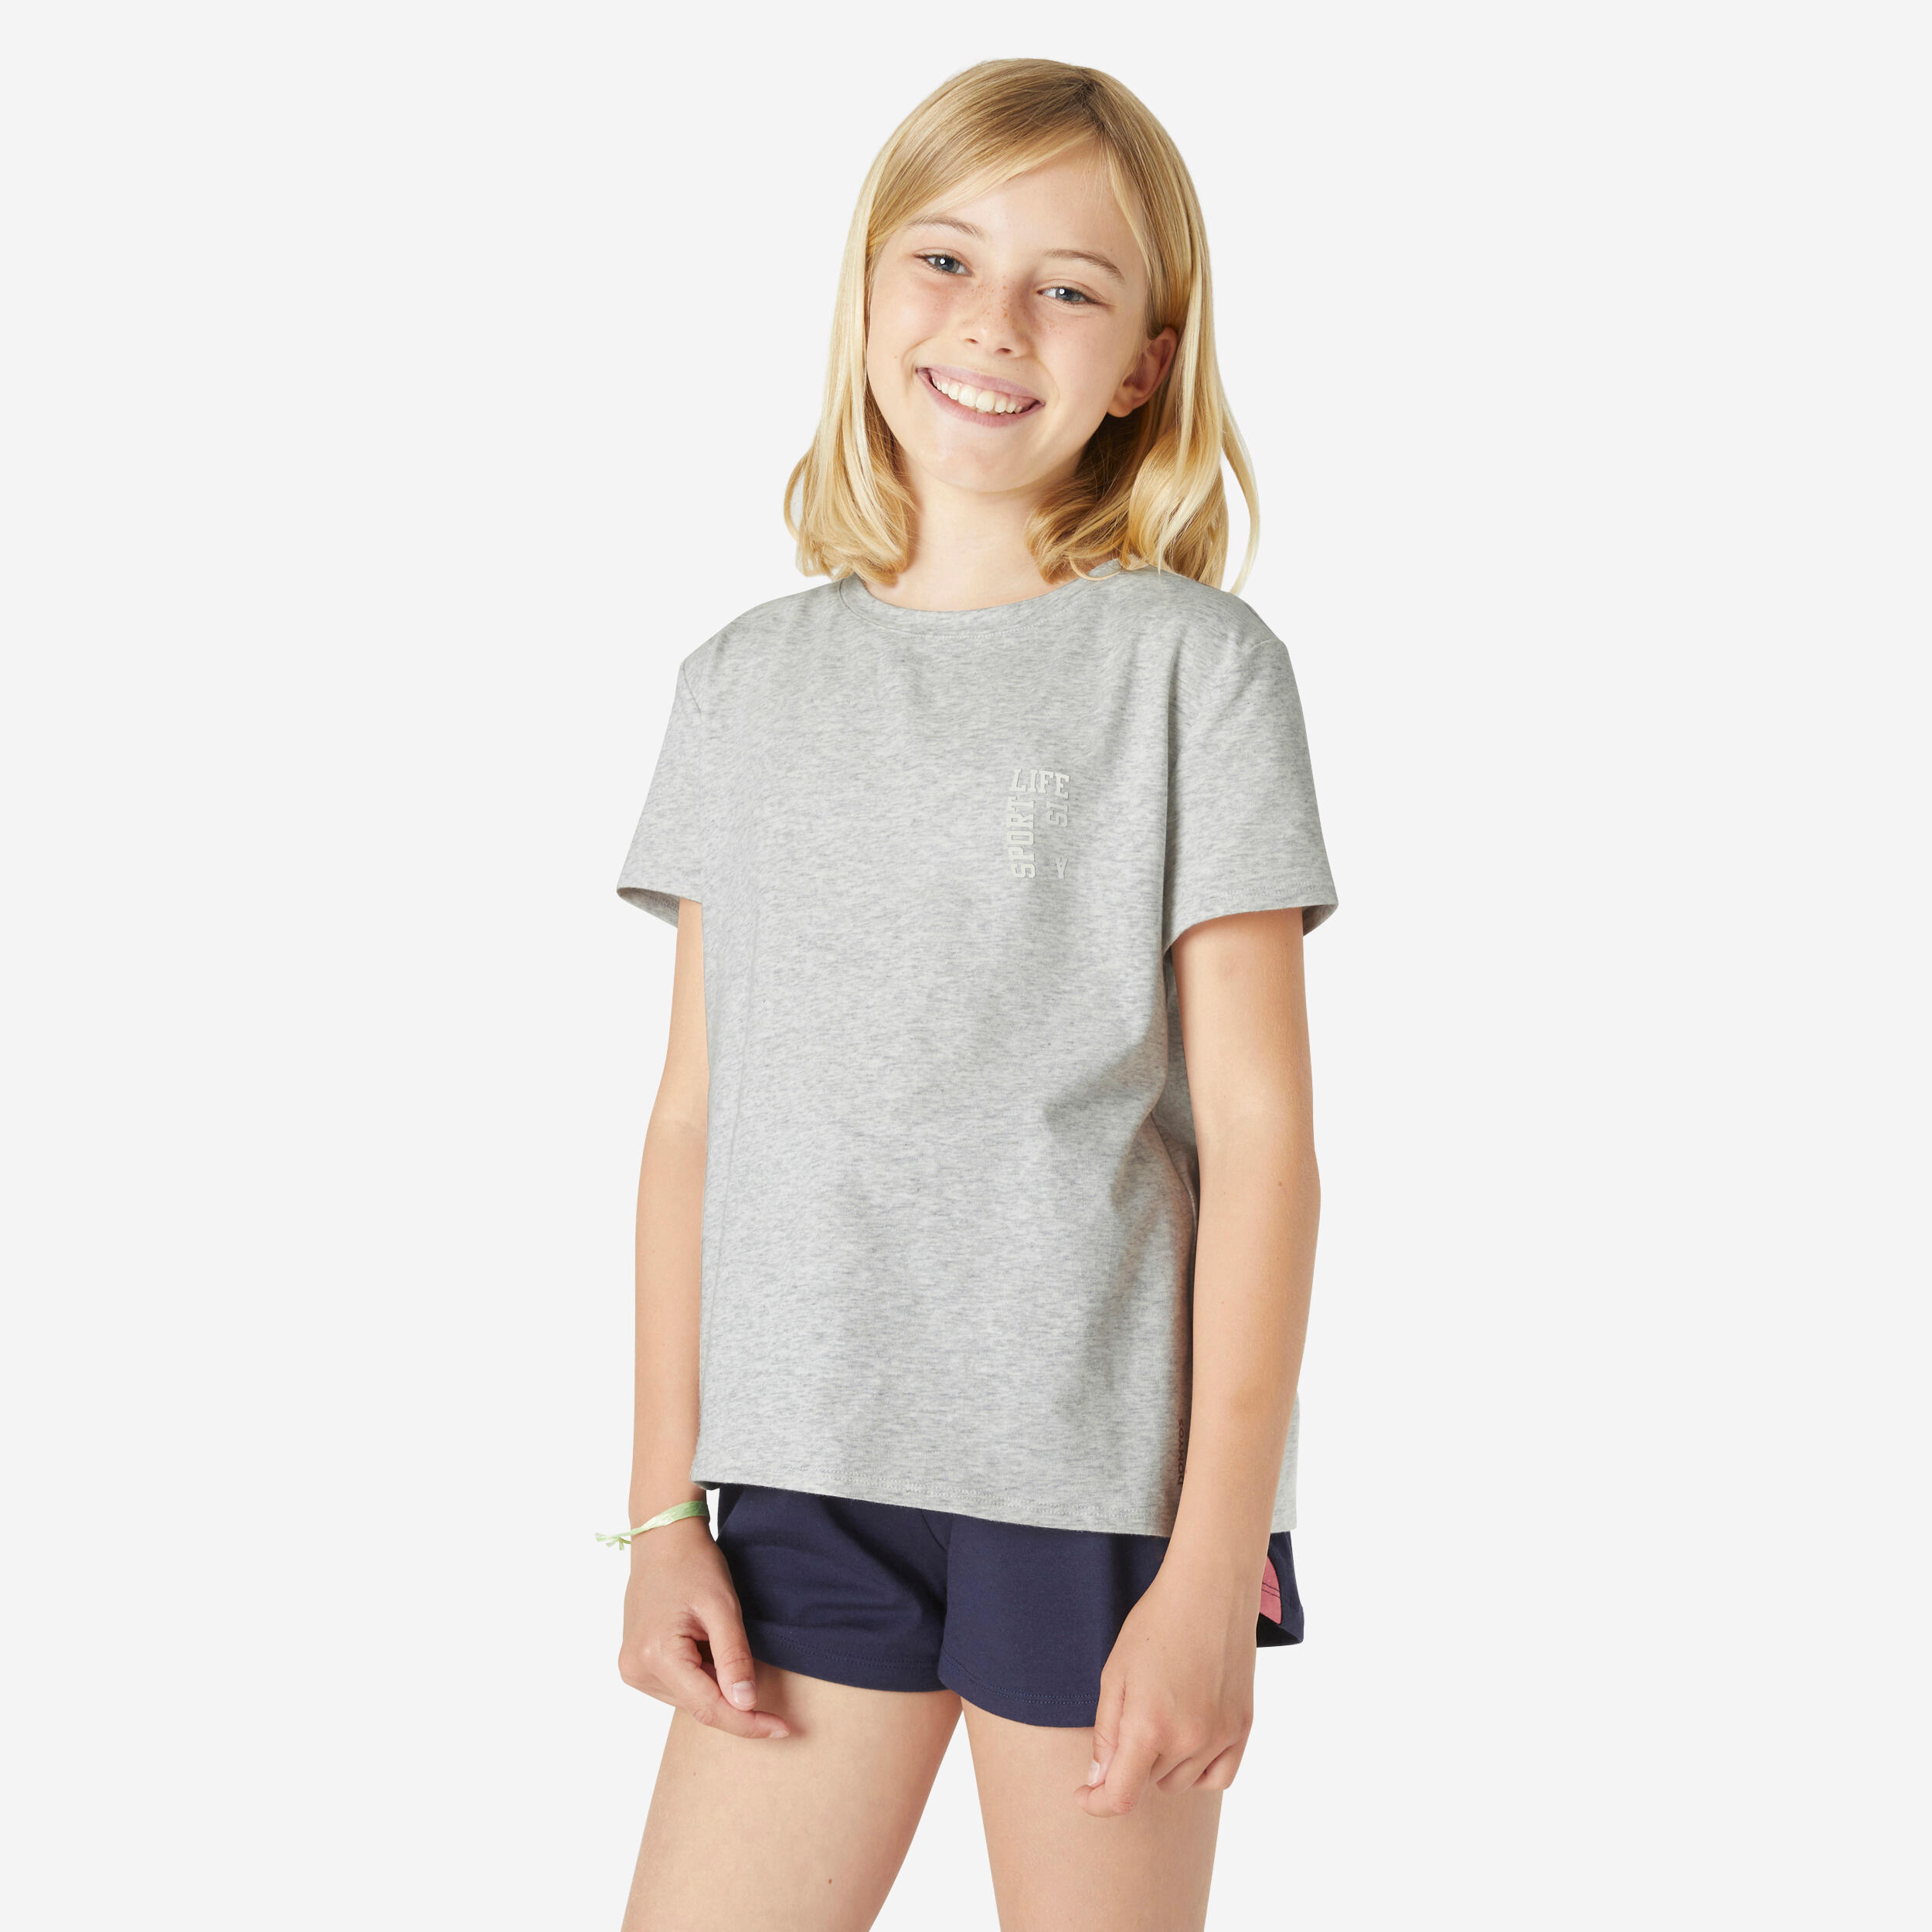 Image of 500 Gym Short-Sleeved T-Shirt - Girls